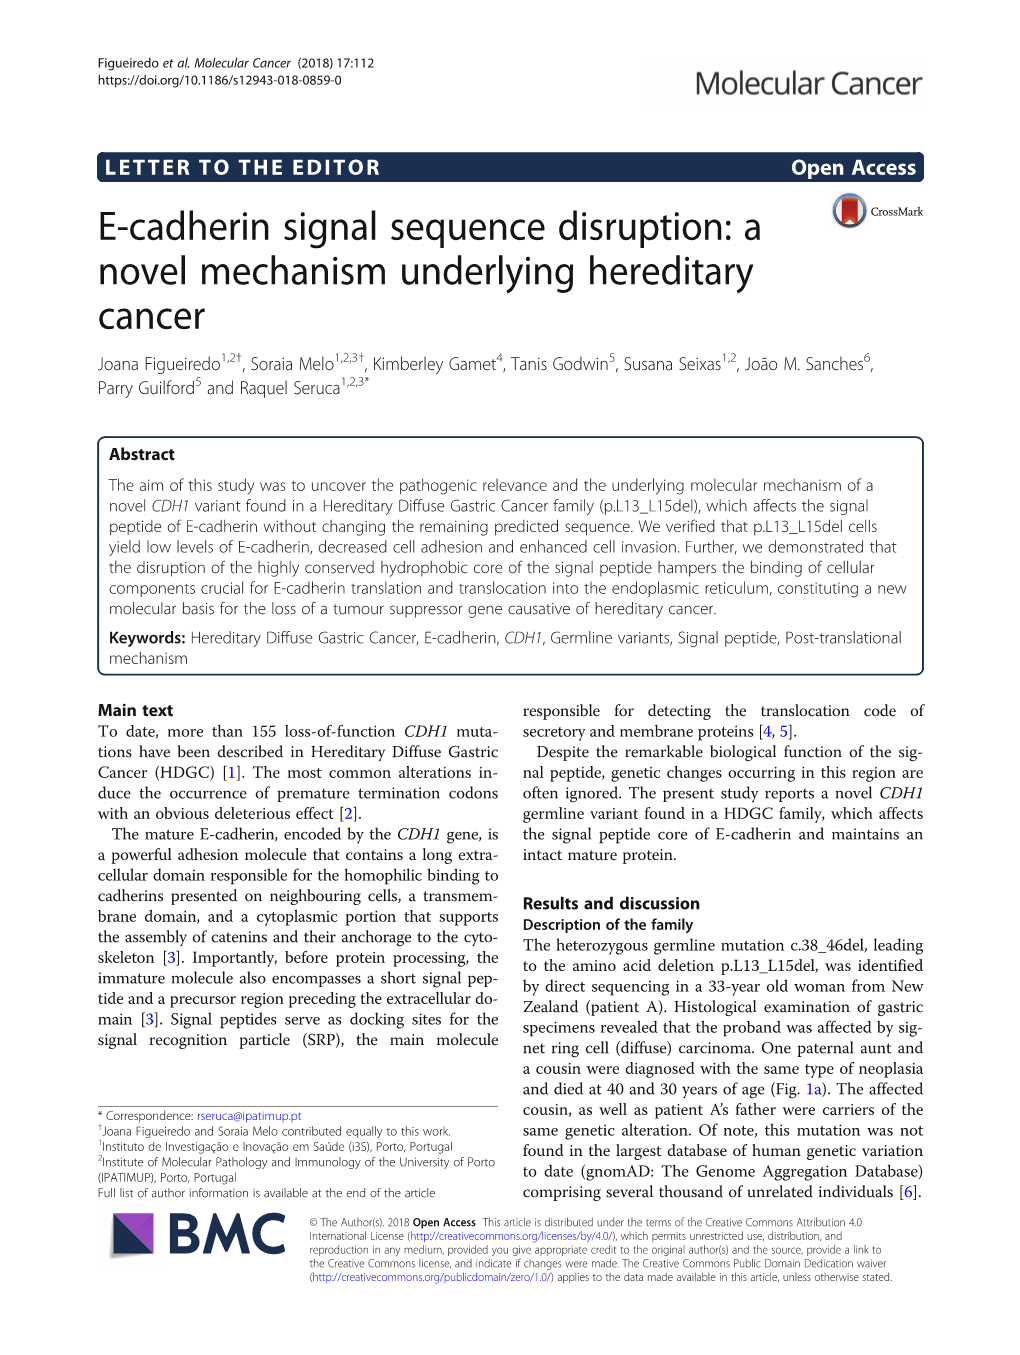 E-Cadherin Signal Sequence Disruption